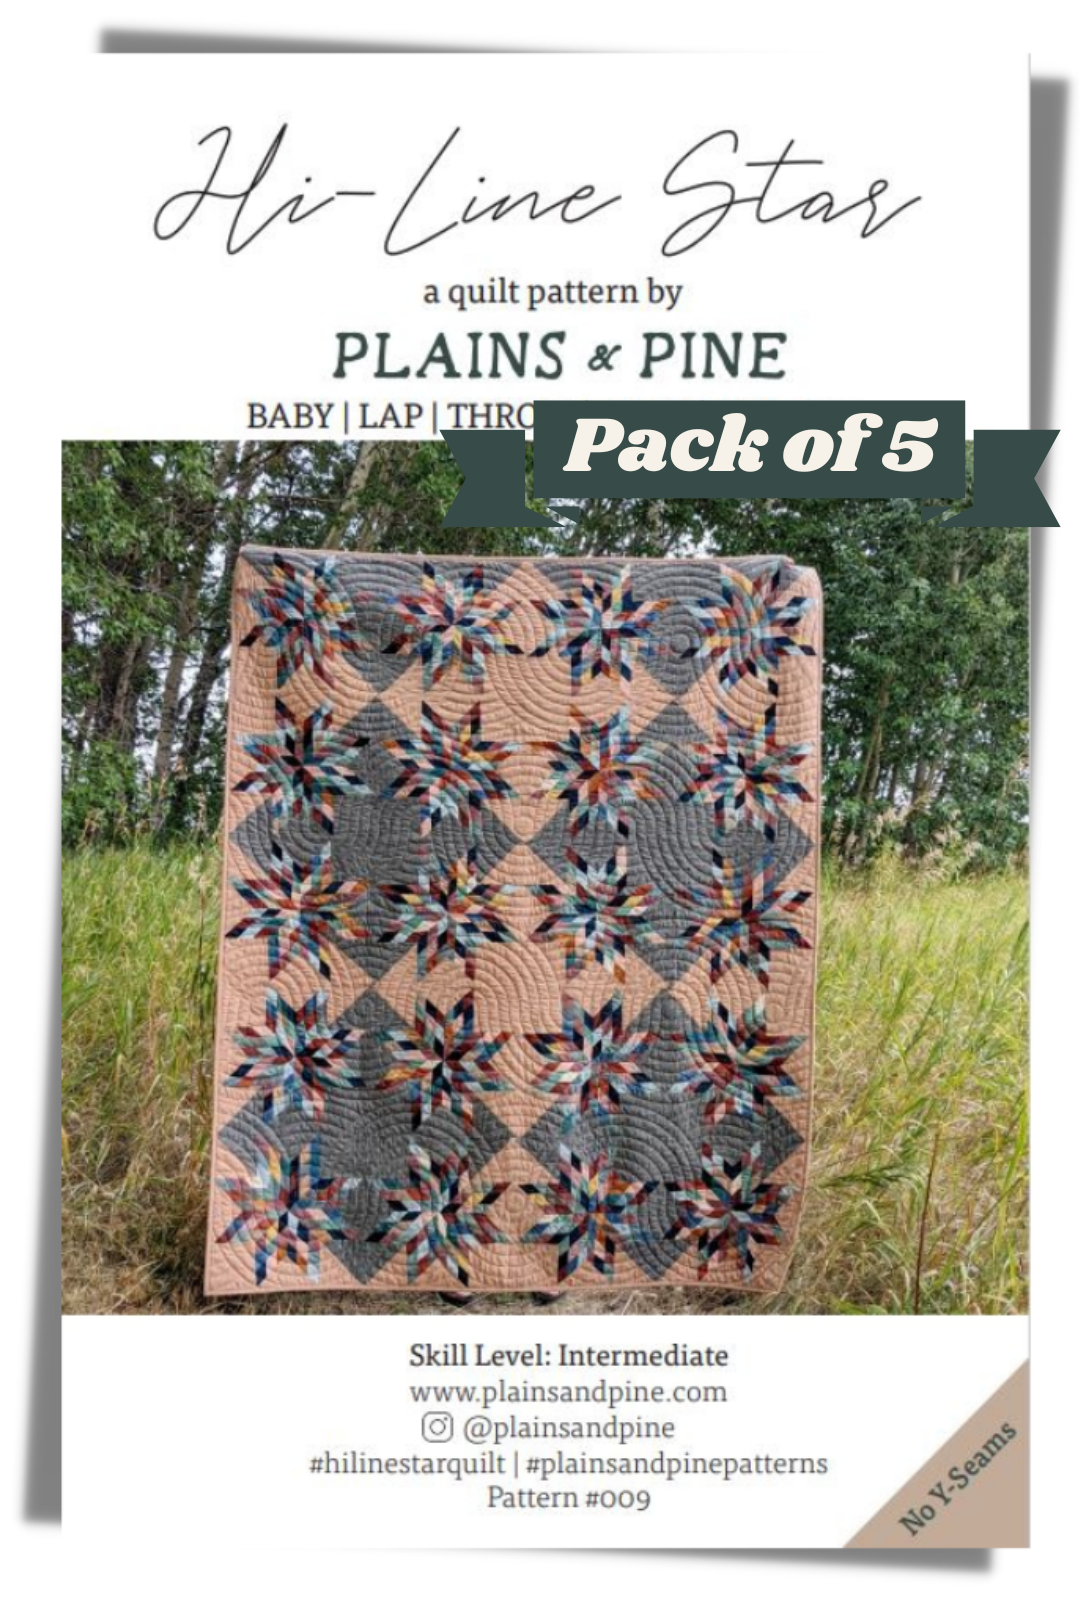 Patterns - Patterns and Plains